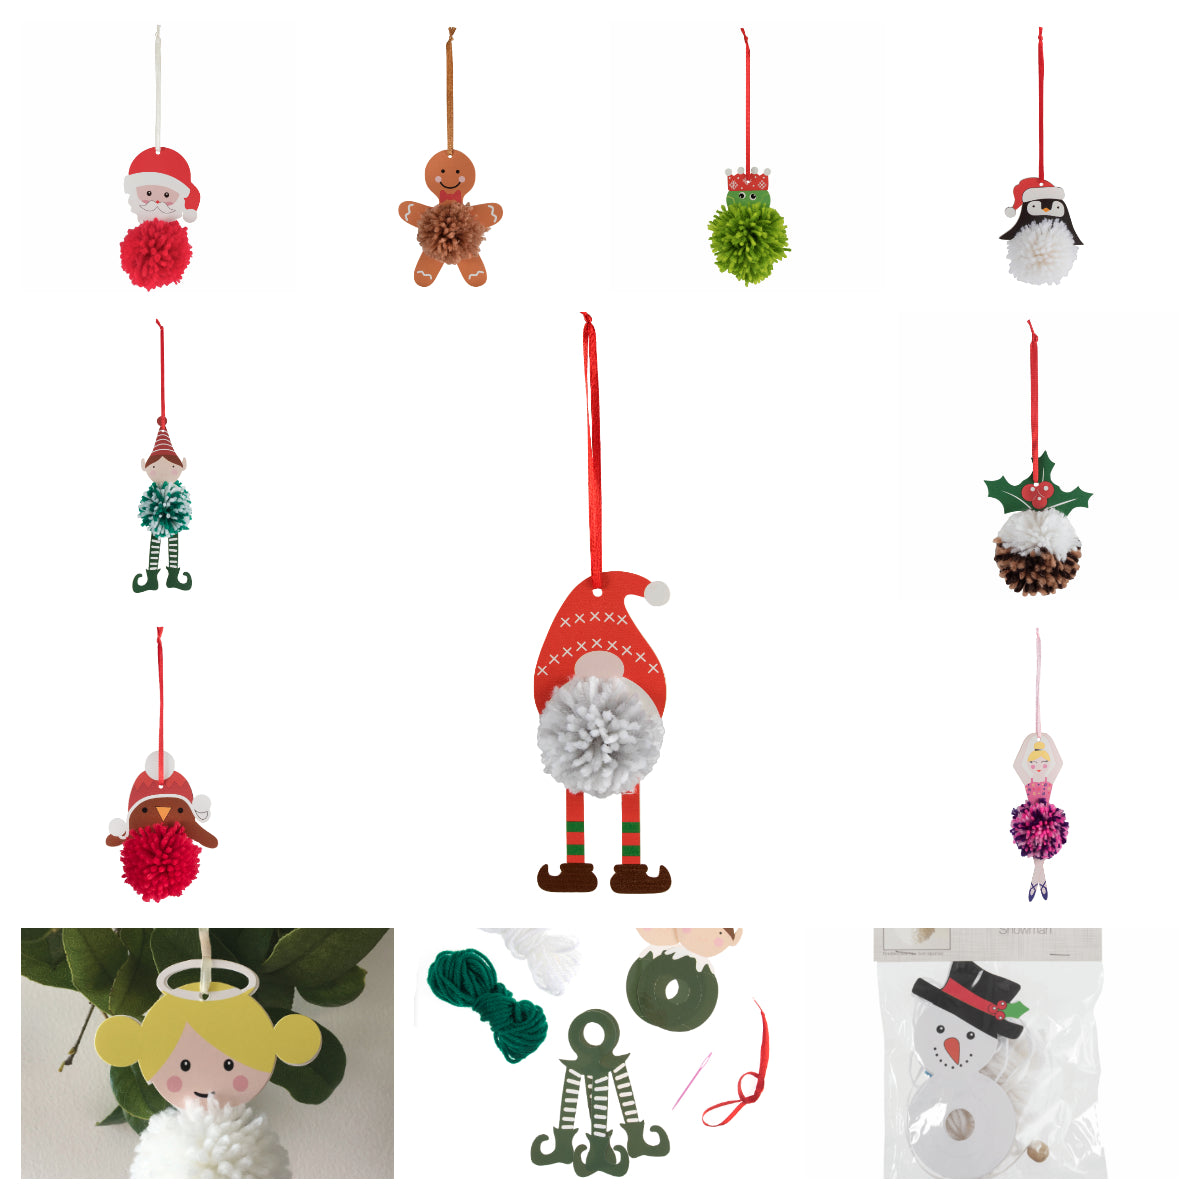 Trimits Pom-pom craft kit Christmas decoration, great stocking filler. Kids, adults.